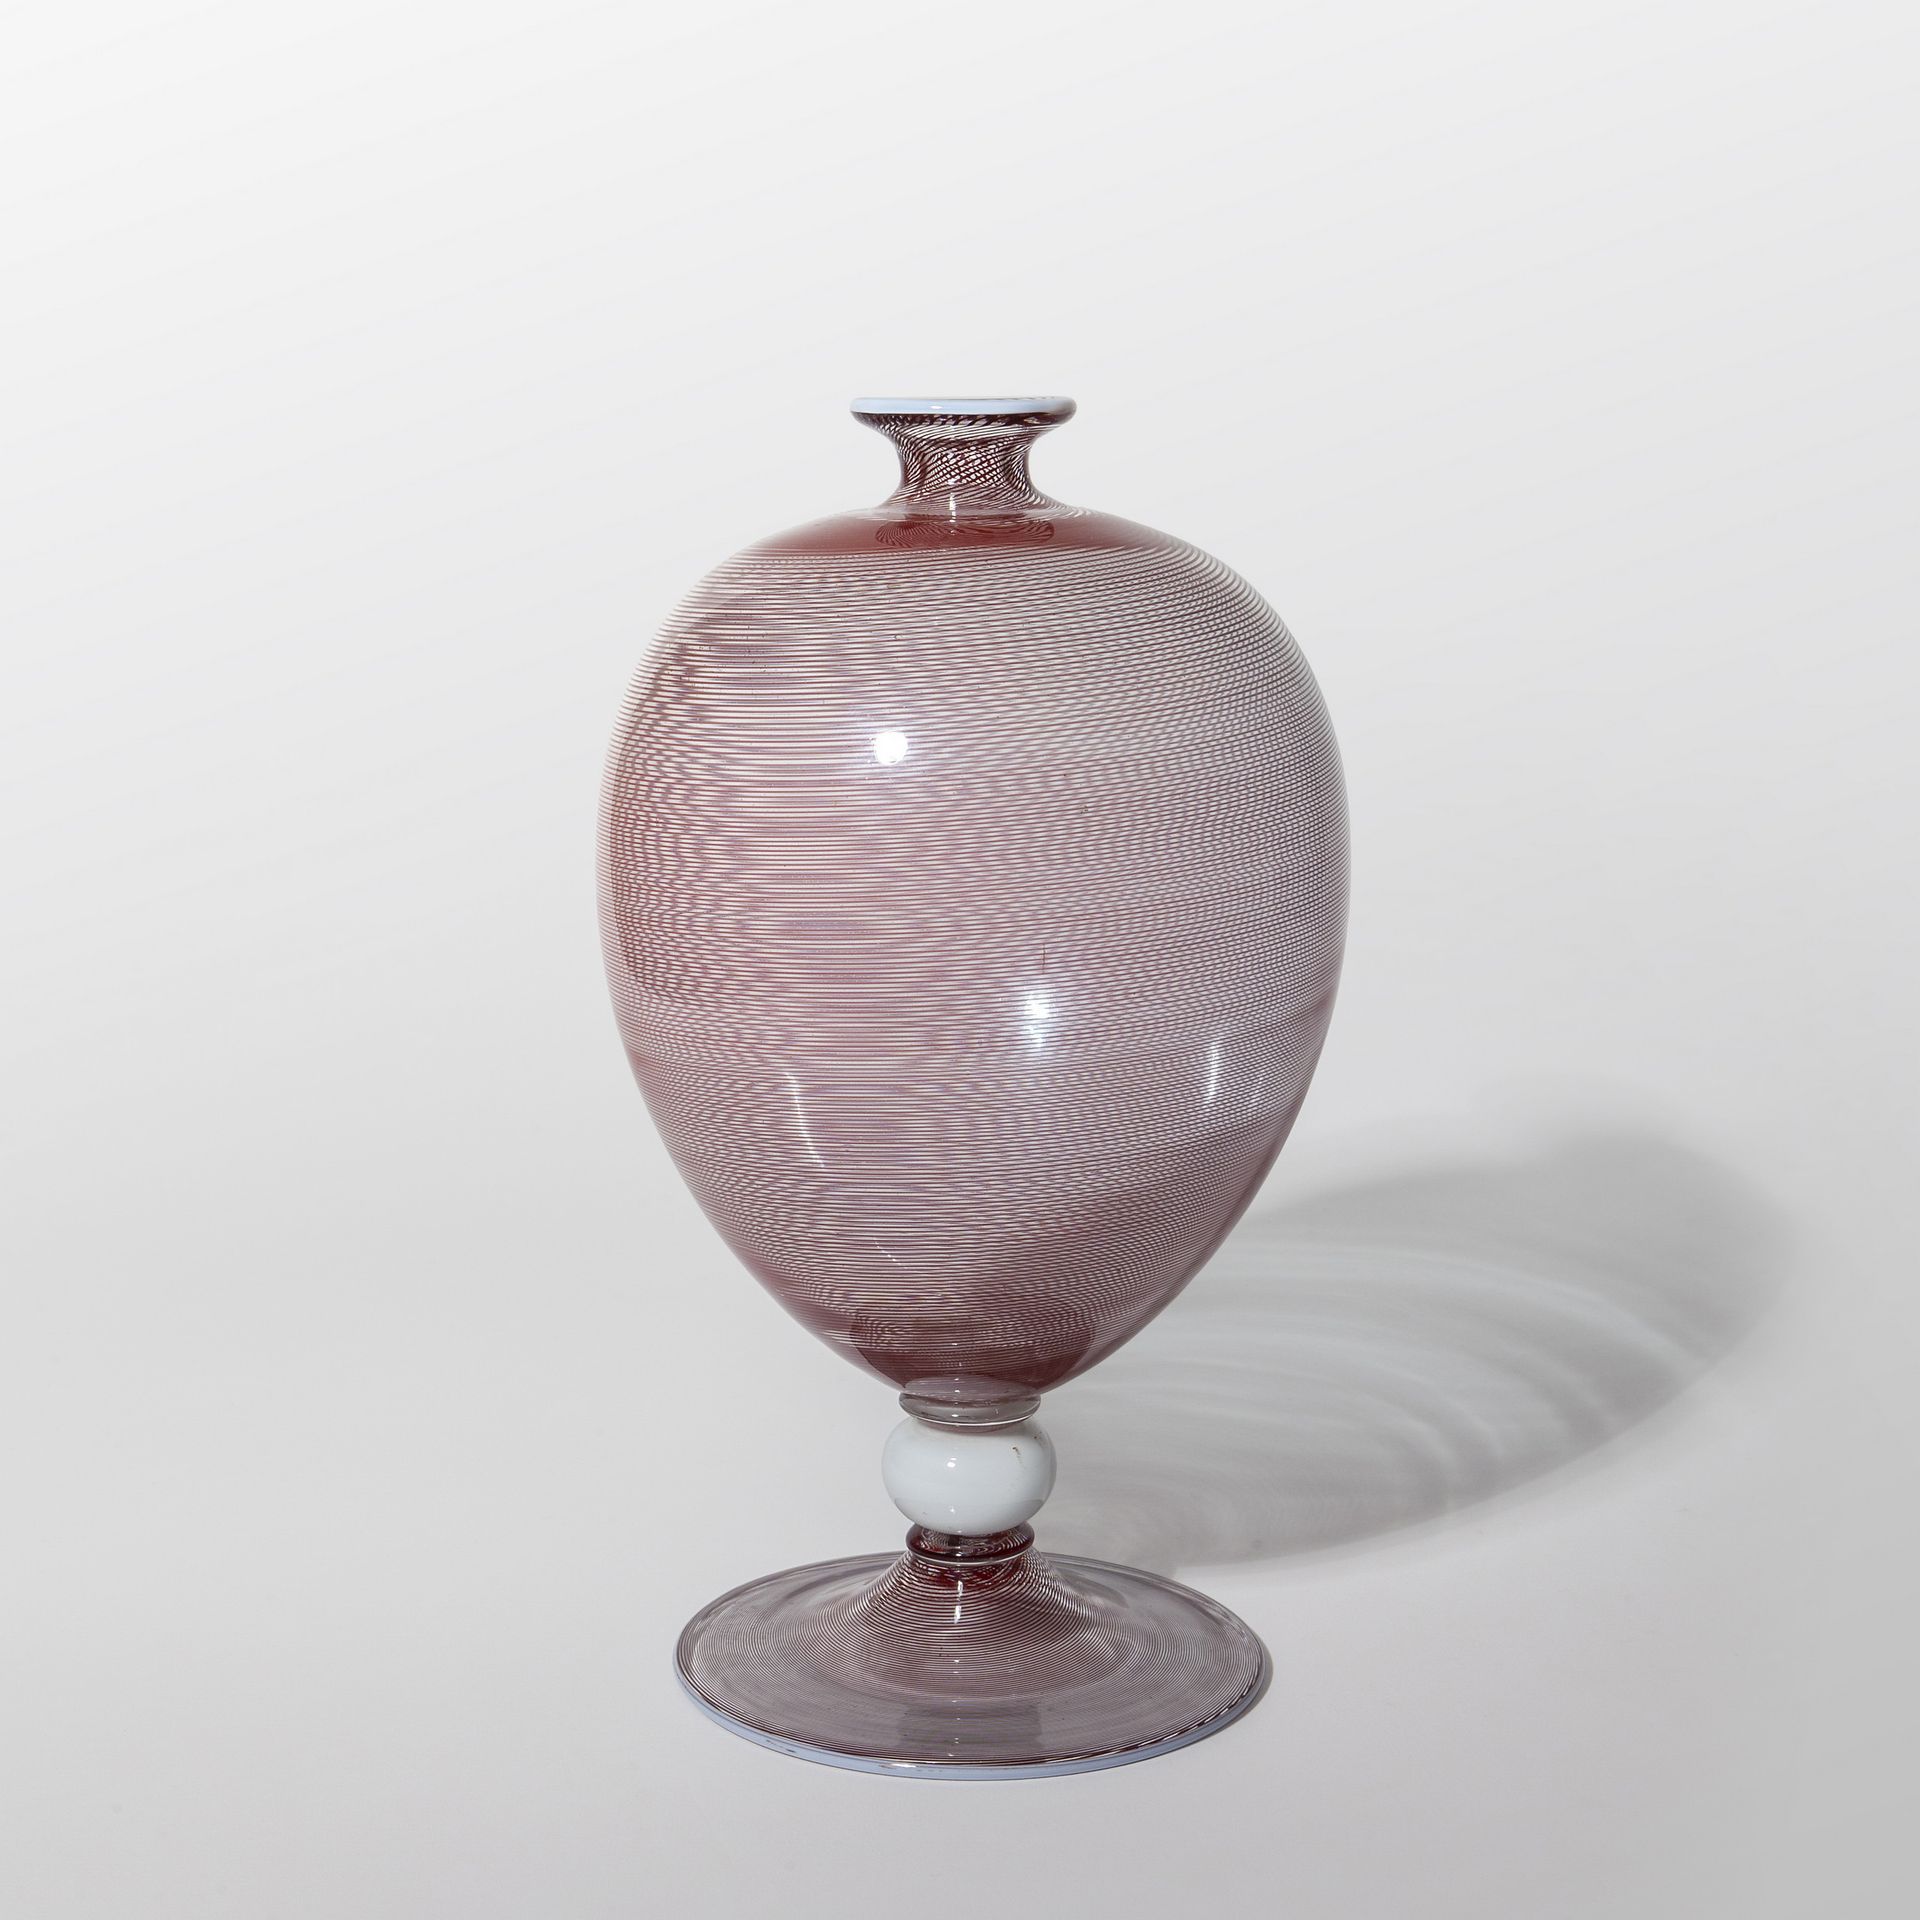 BAROVIER & TOSO BAROVIER & TOSO
A 'veronese' vase in amethyst filigree glass wit&hellip;